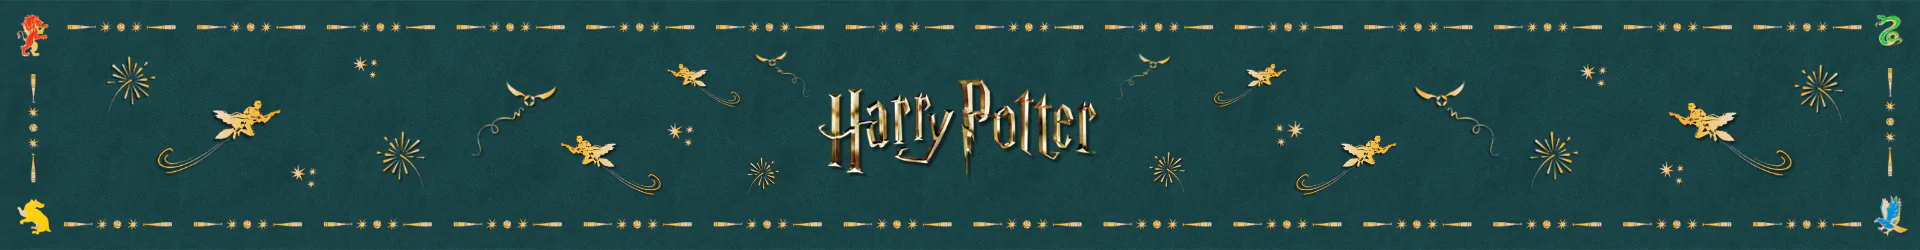 Harry Potter aufkleber banner